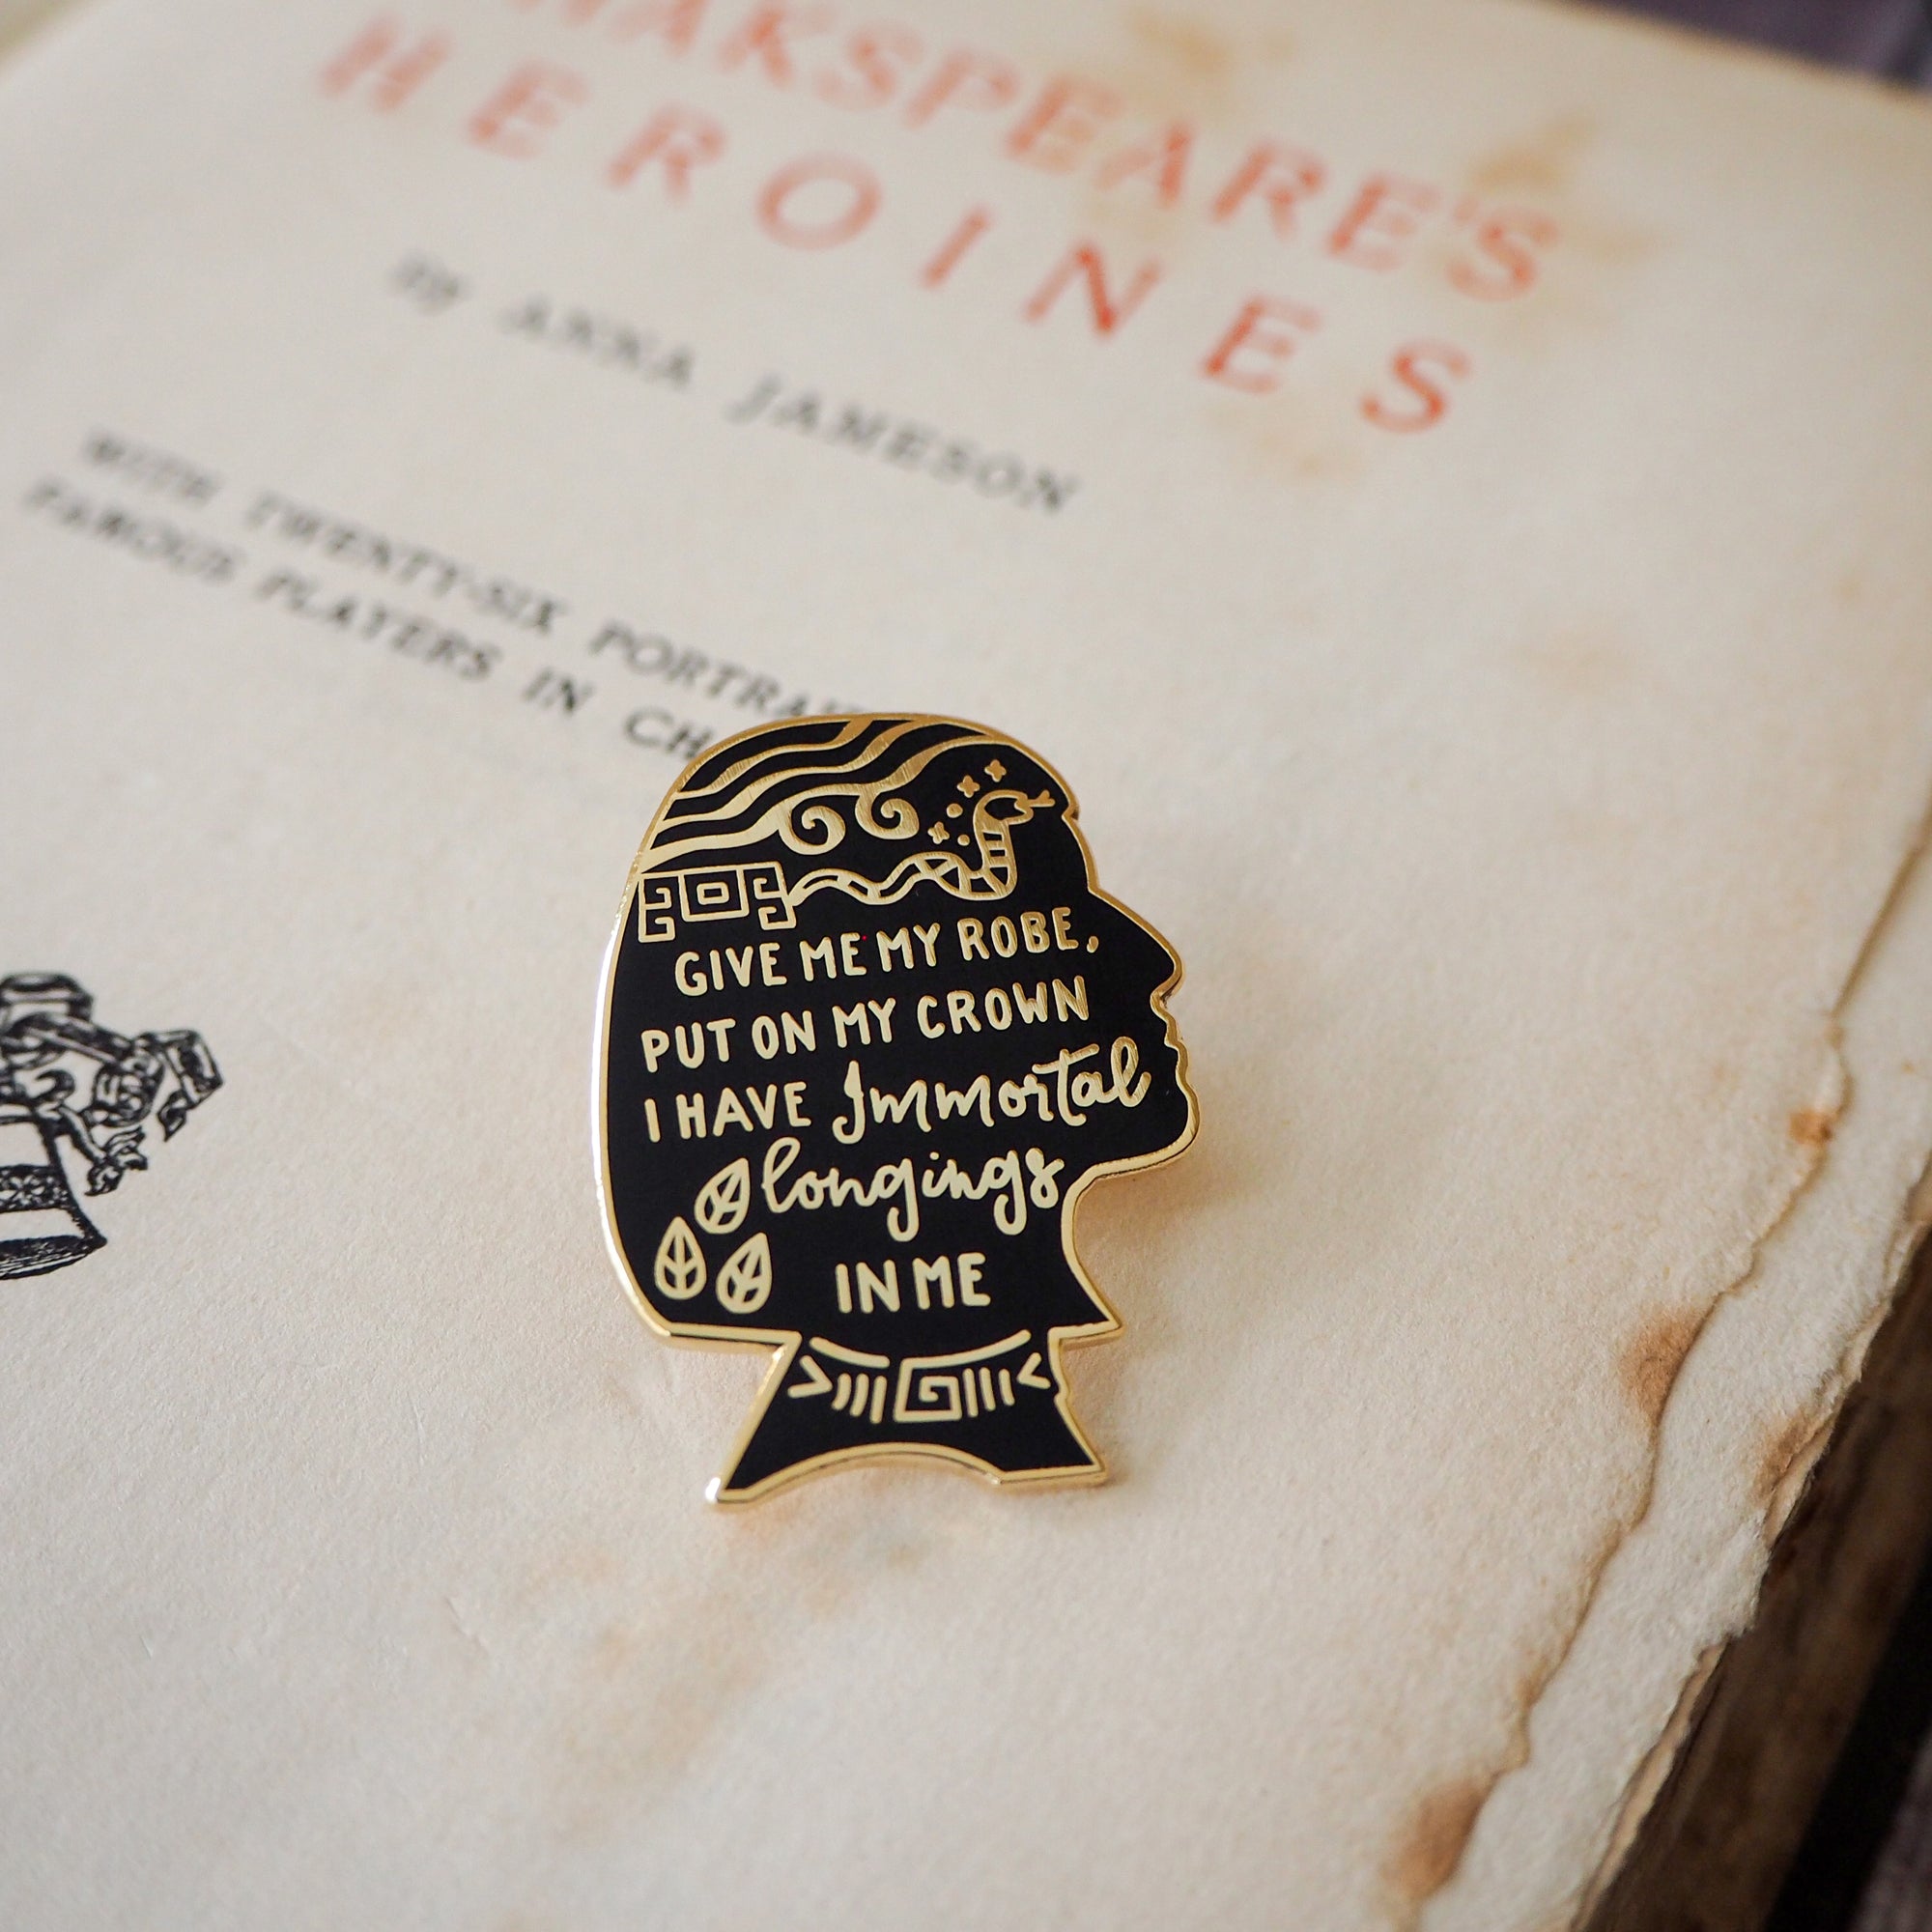 Cleopatra Enamel Pin - Shakespeare's Heroines Collection - Literary Emporium 